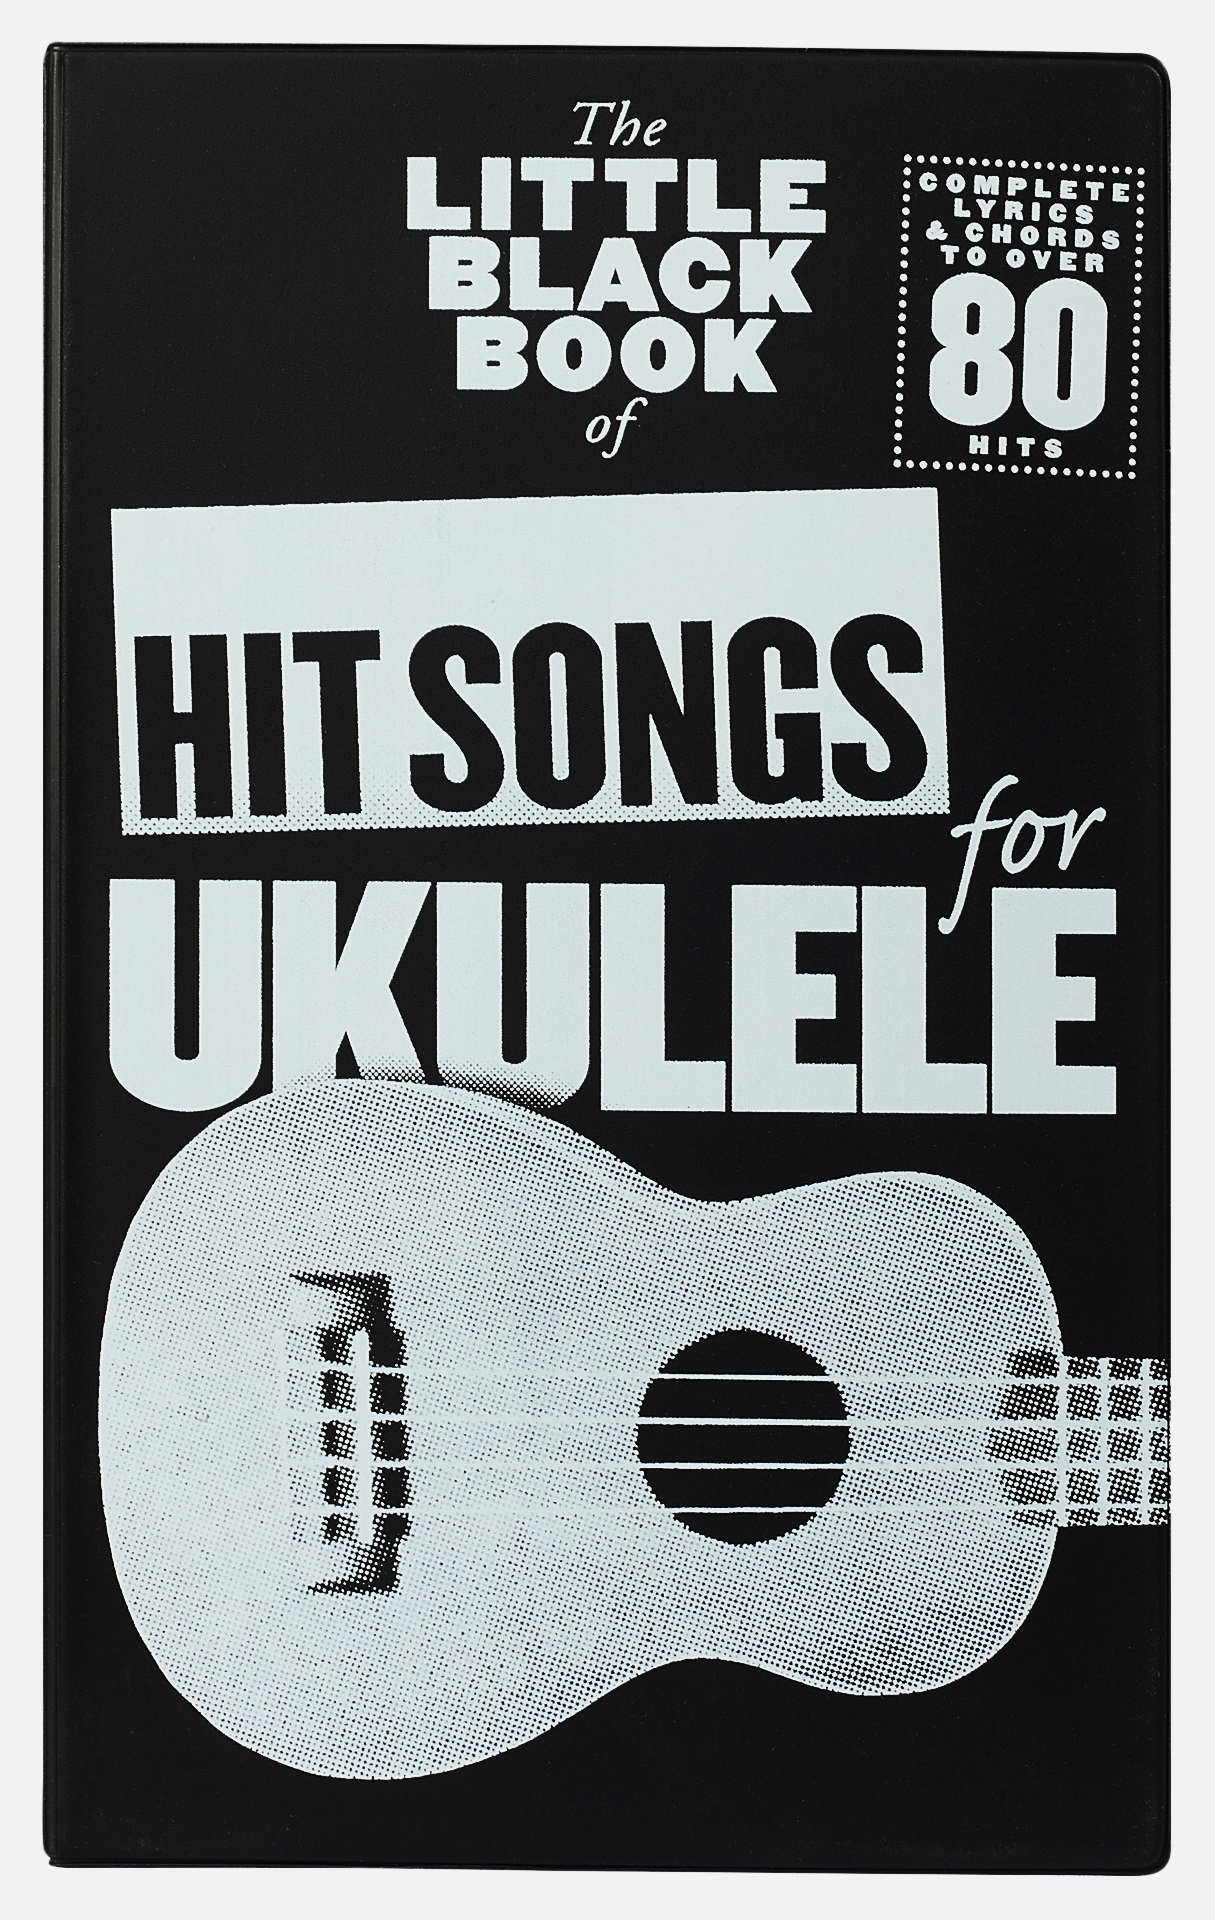 MS The Little Black Book Of Hit Songs For Ukulele